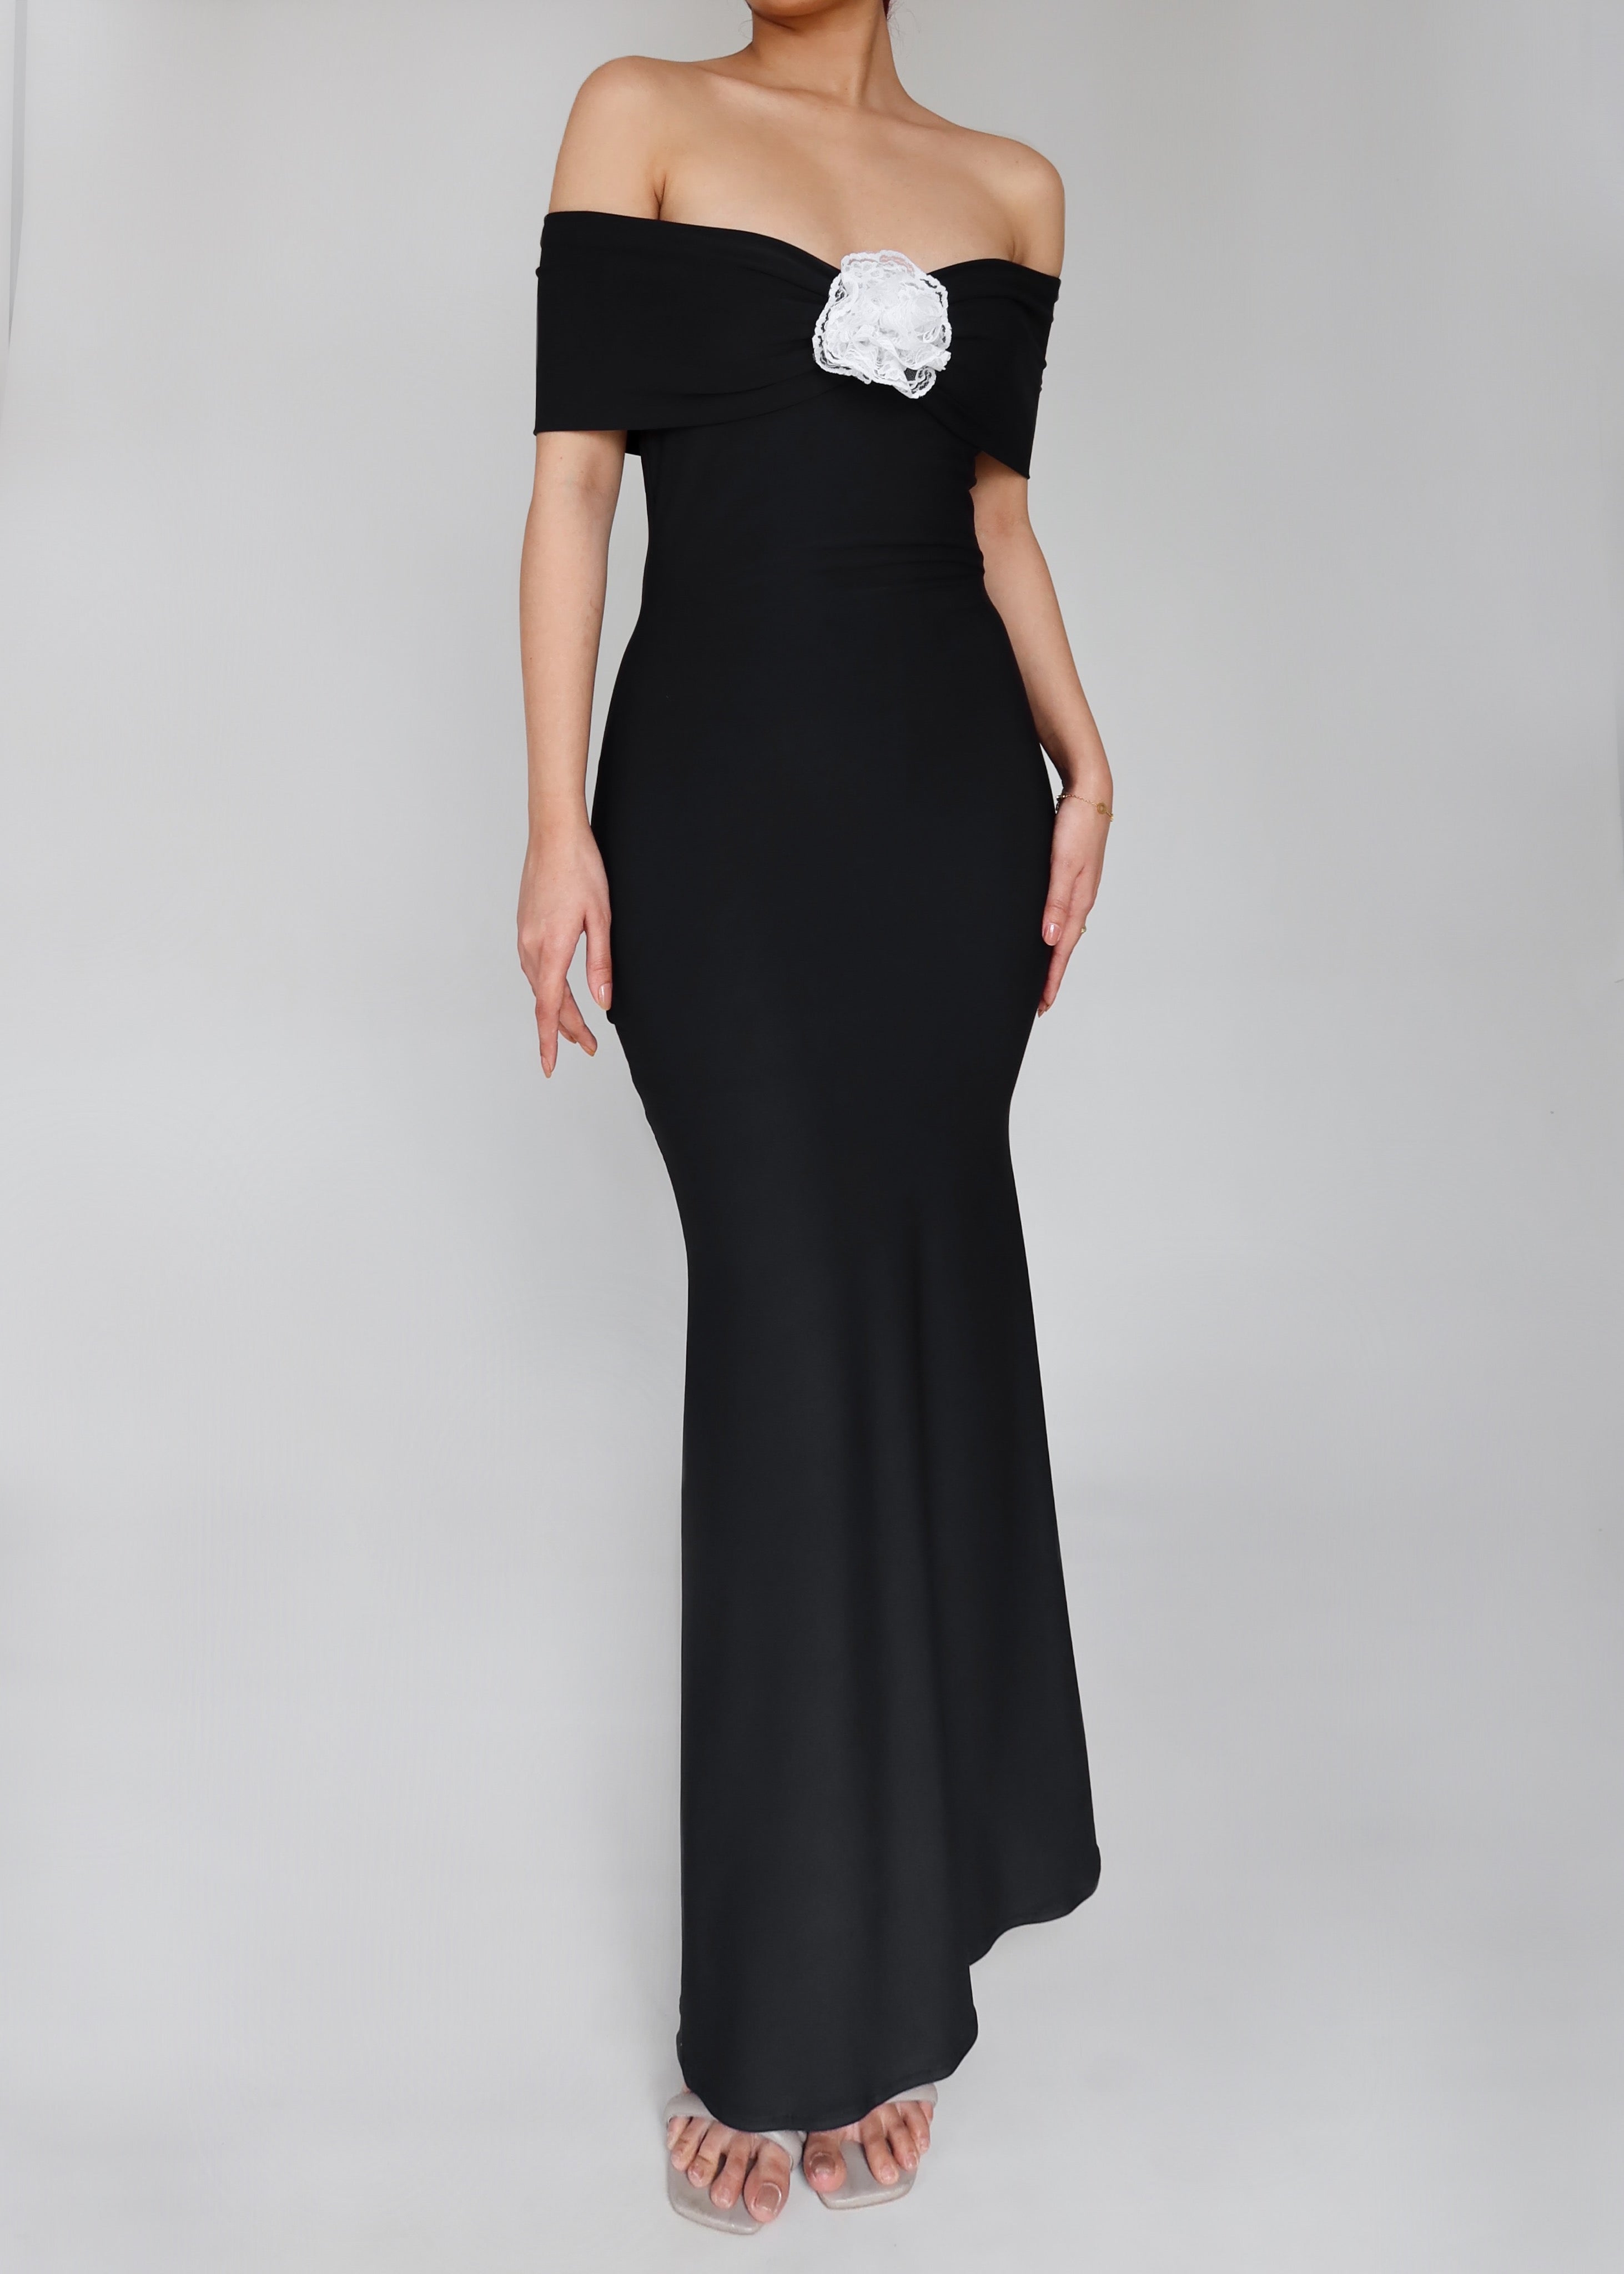 Buy Women Off-White & Green Printed Belted Maxi Dress - Dresses for Women |  Sassafras.in